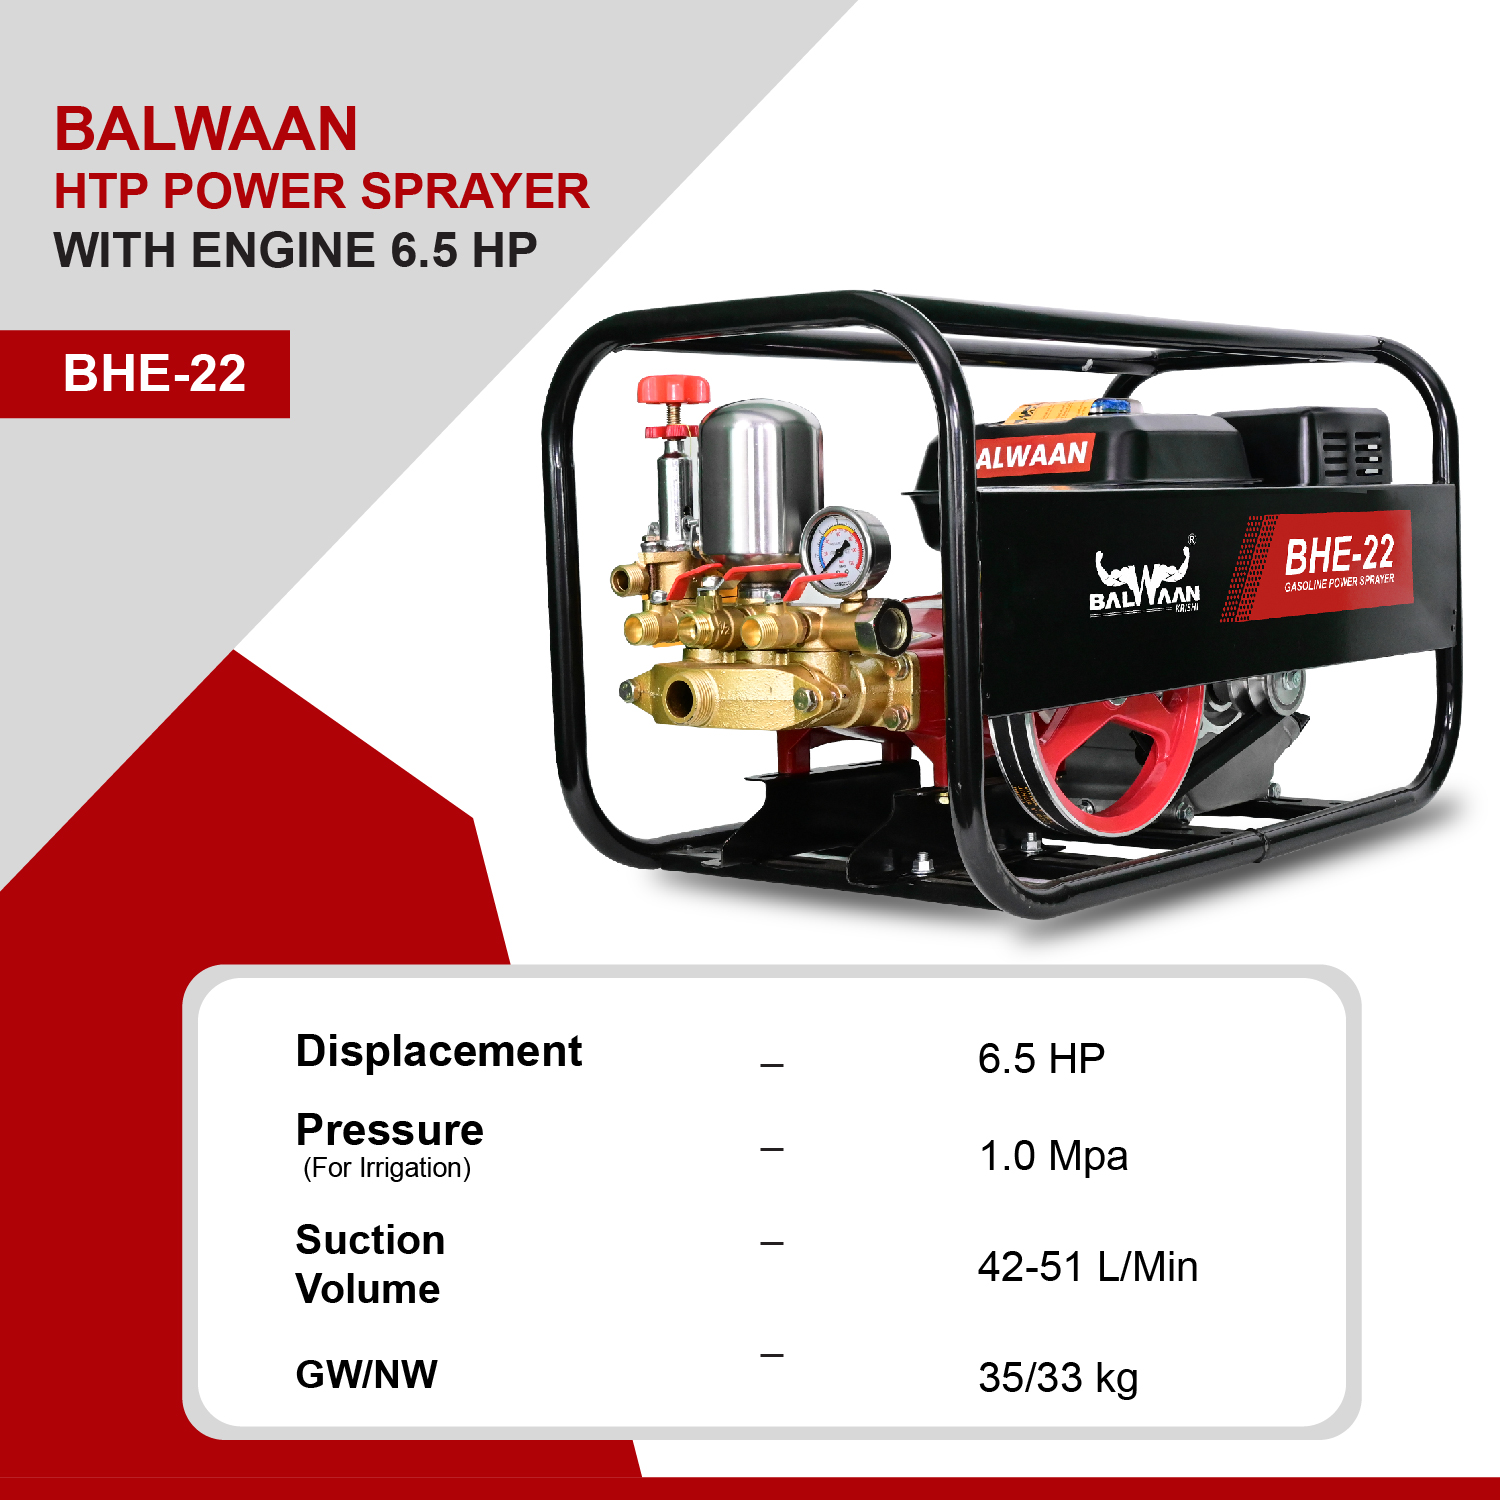 Balwaan BHE-22 HTP with Enigne 6.5HP